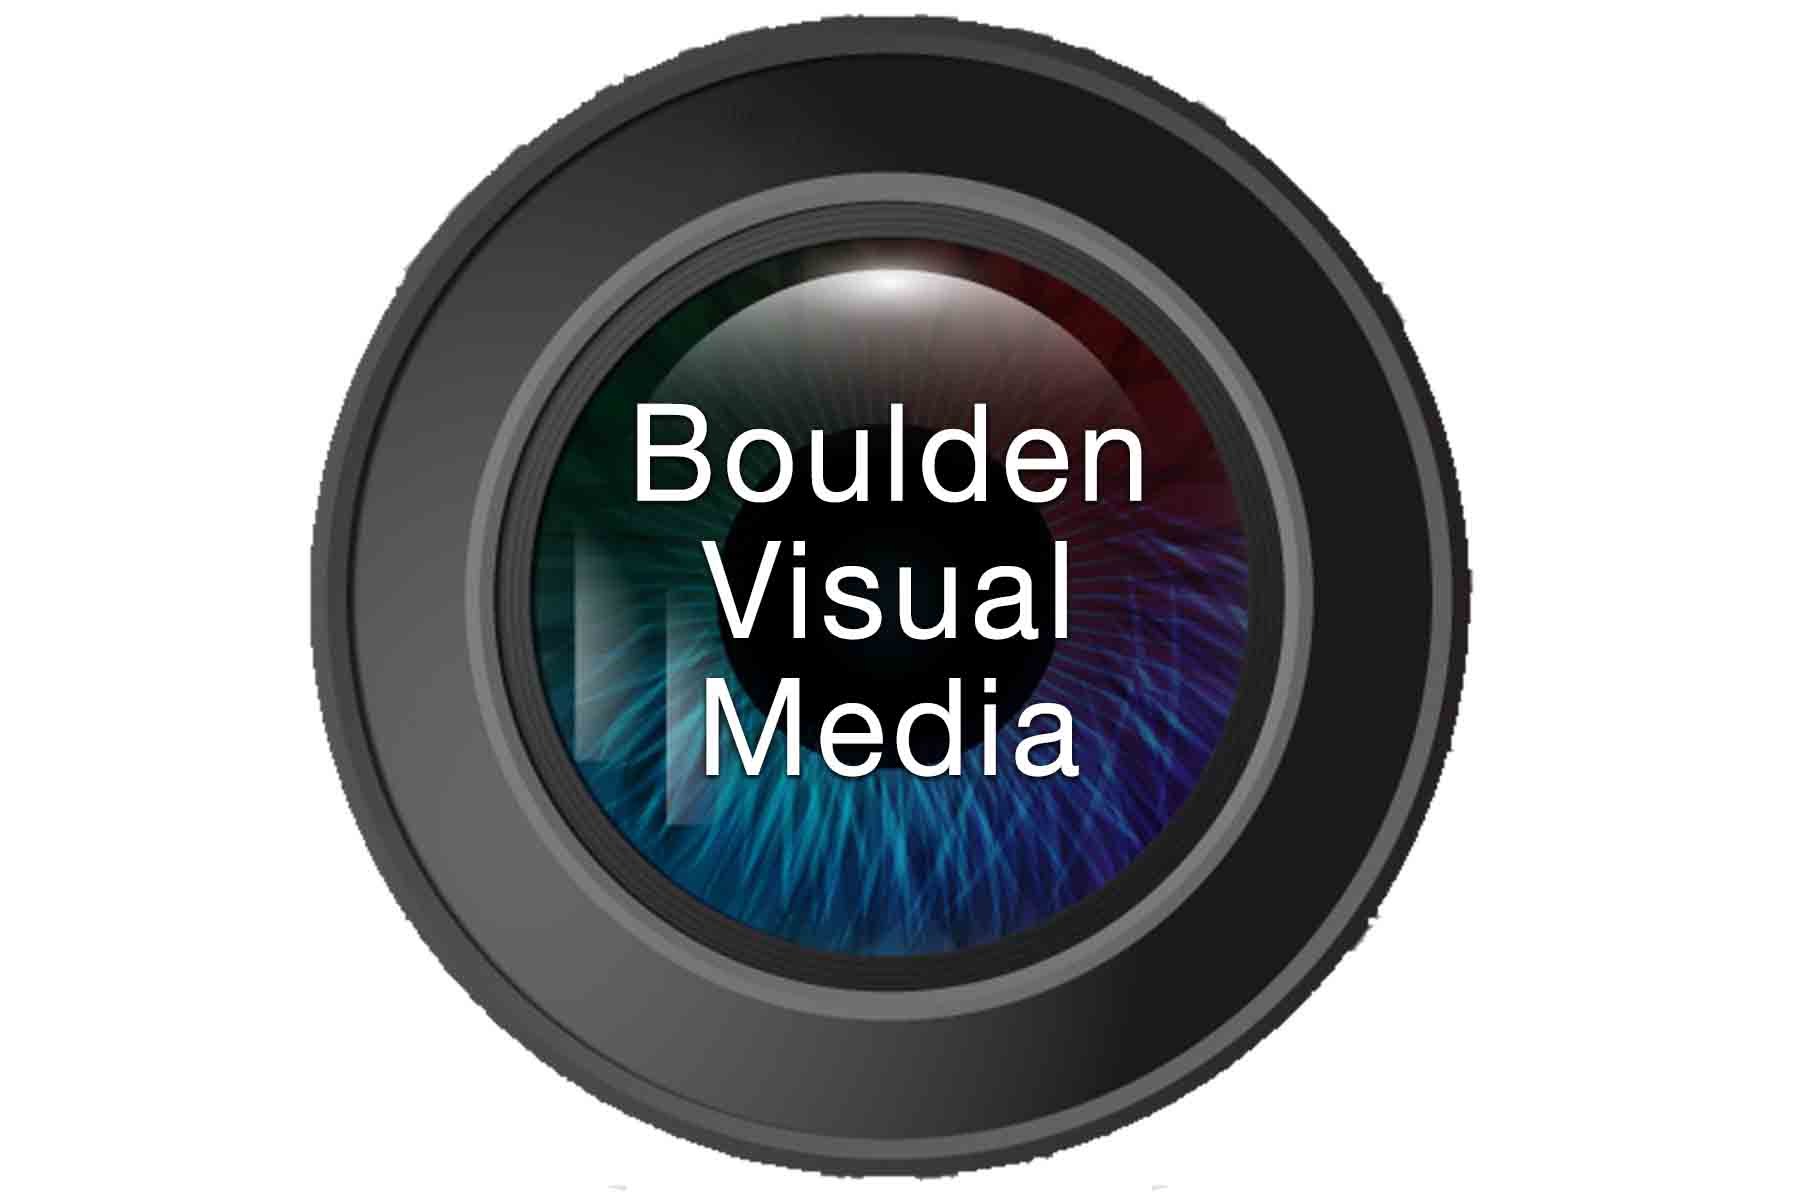 Boulden Visual Media